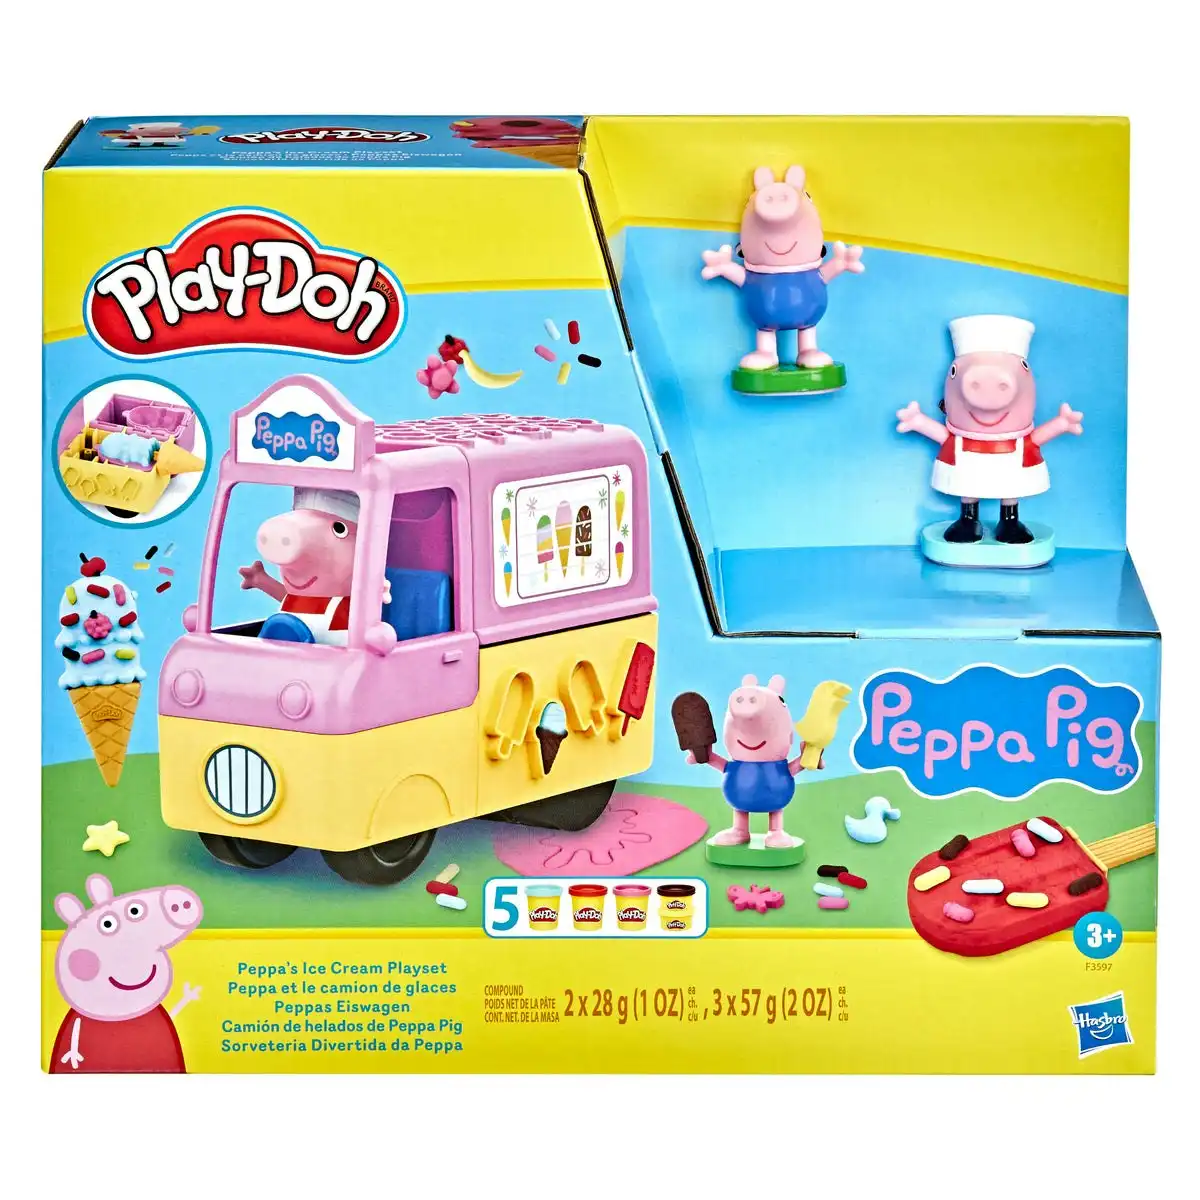 Play-doh - Peppa Pig Peppa's Ice Cream Playset